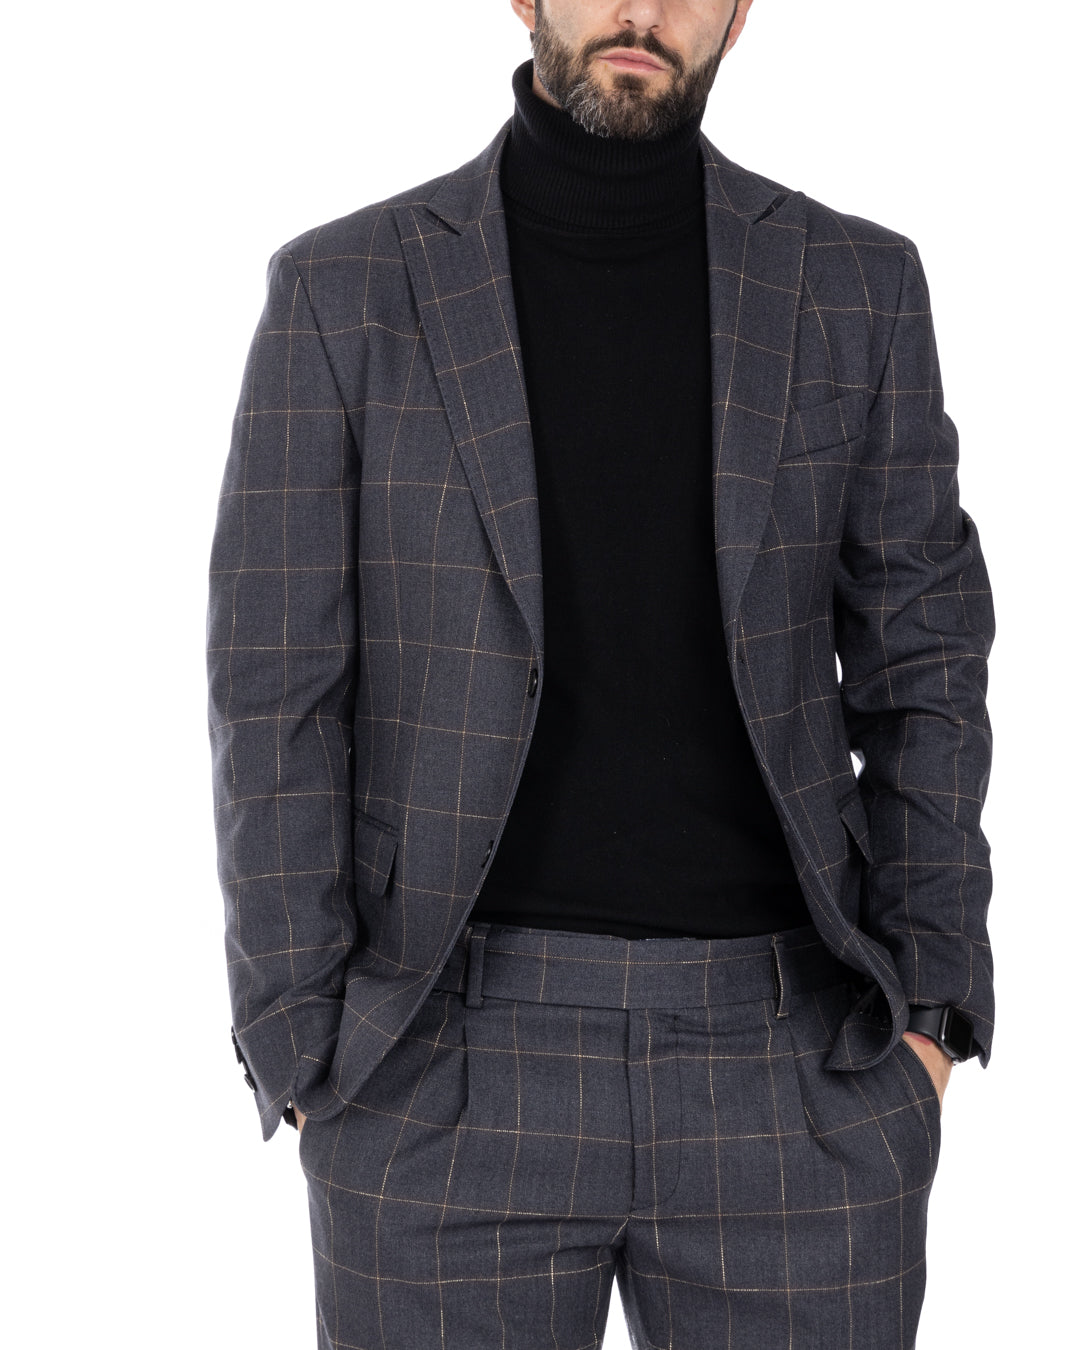 Italian - gray squared single-breasted jacket